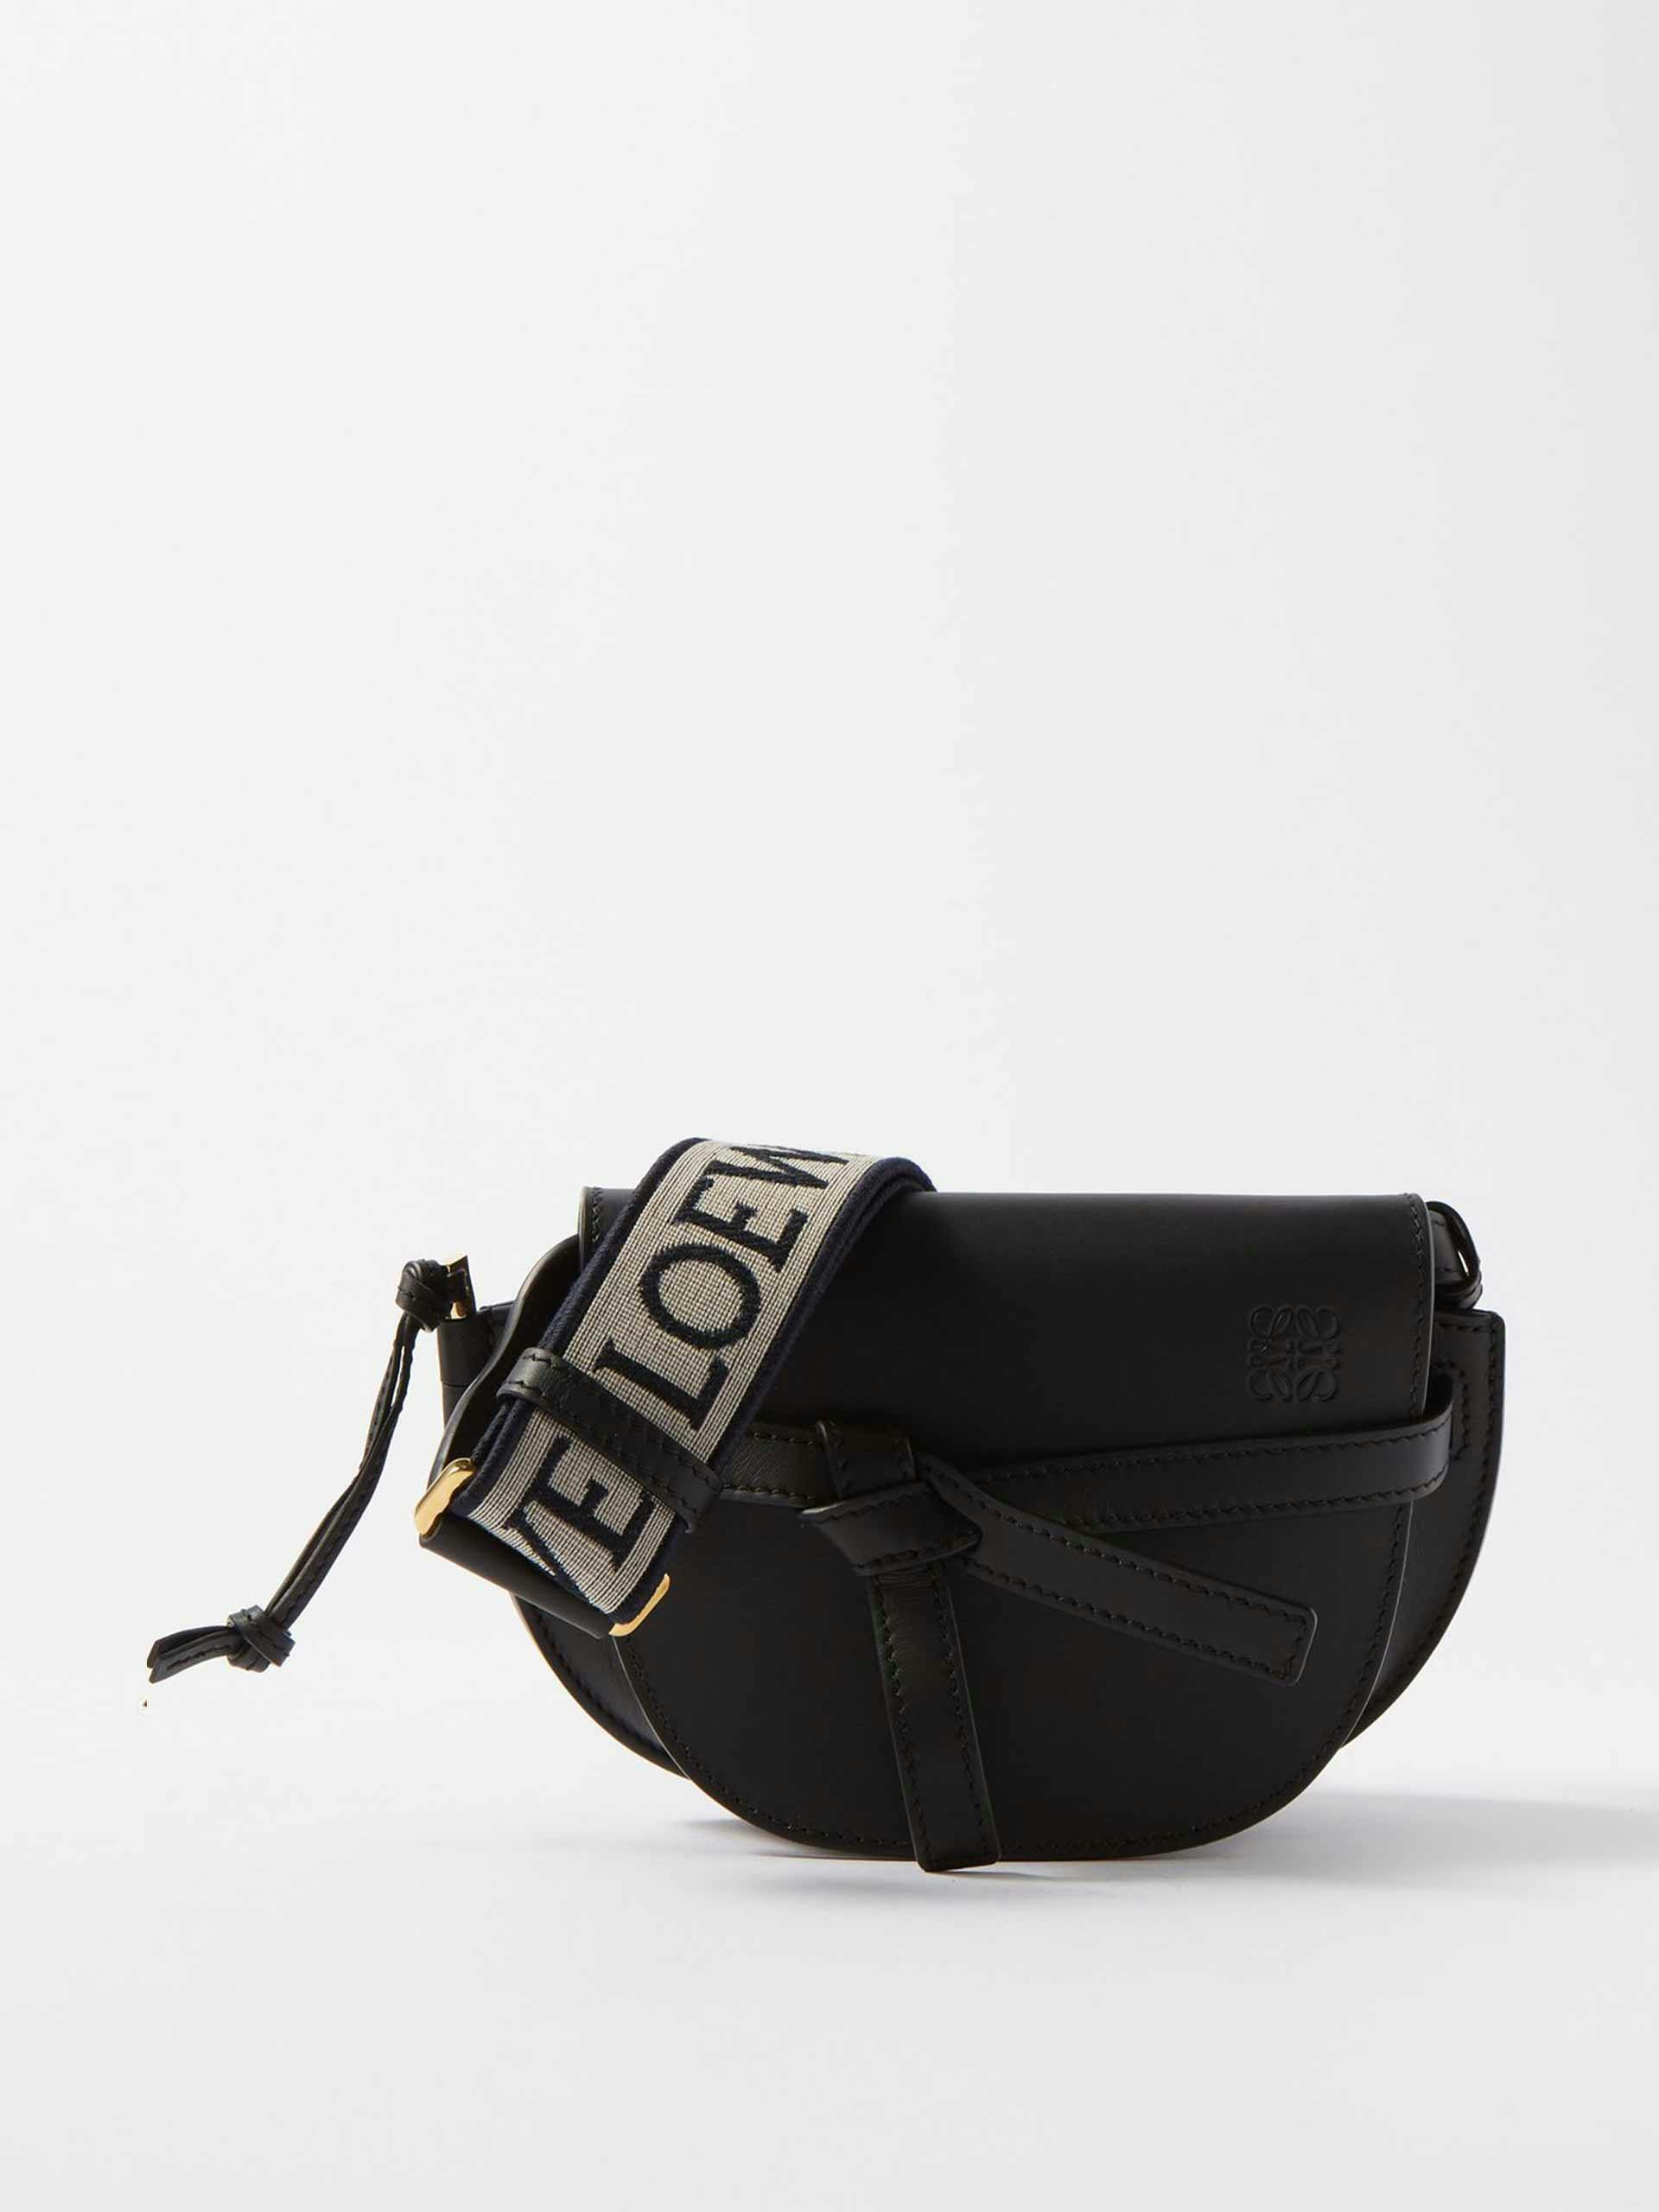 Black mini leather cross-body bag